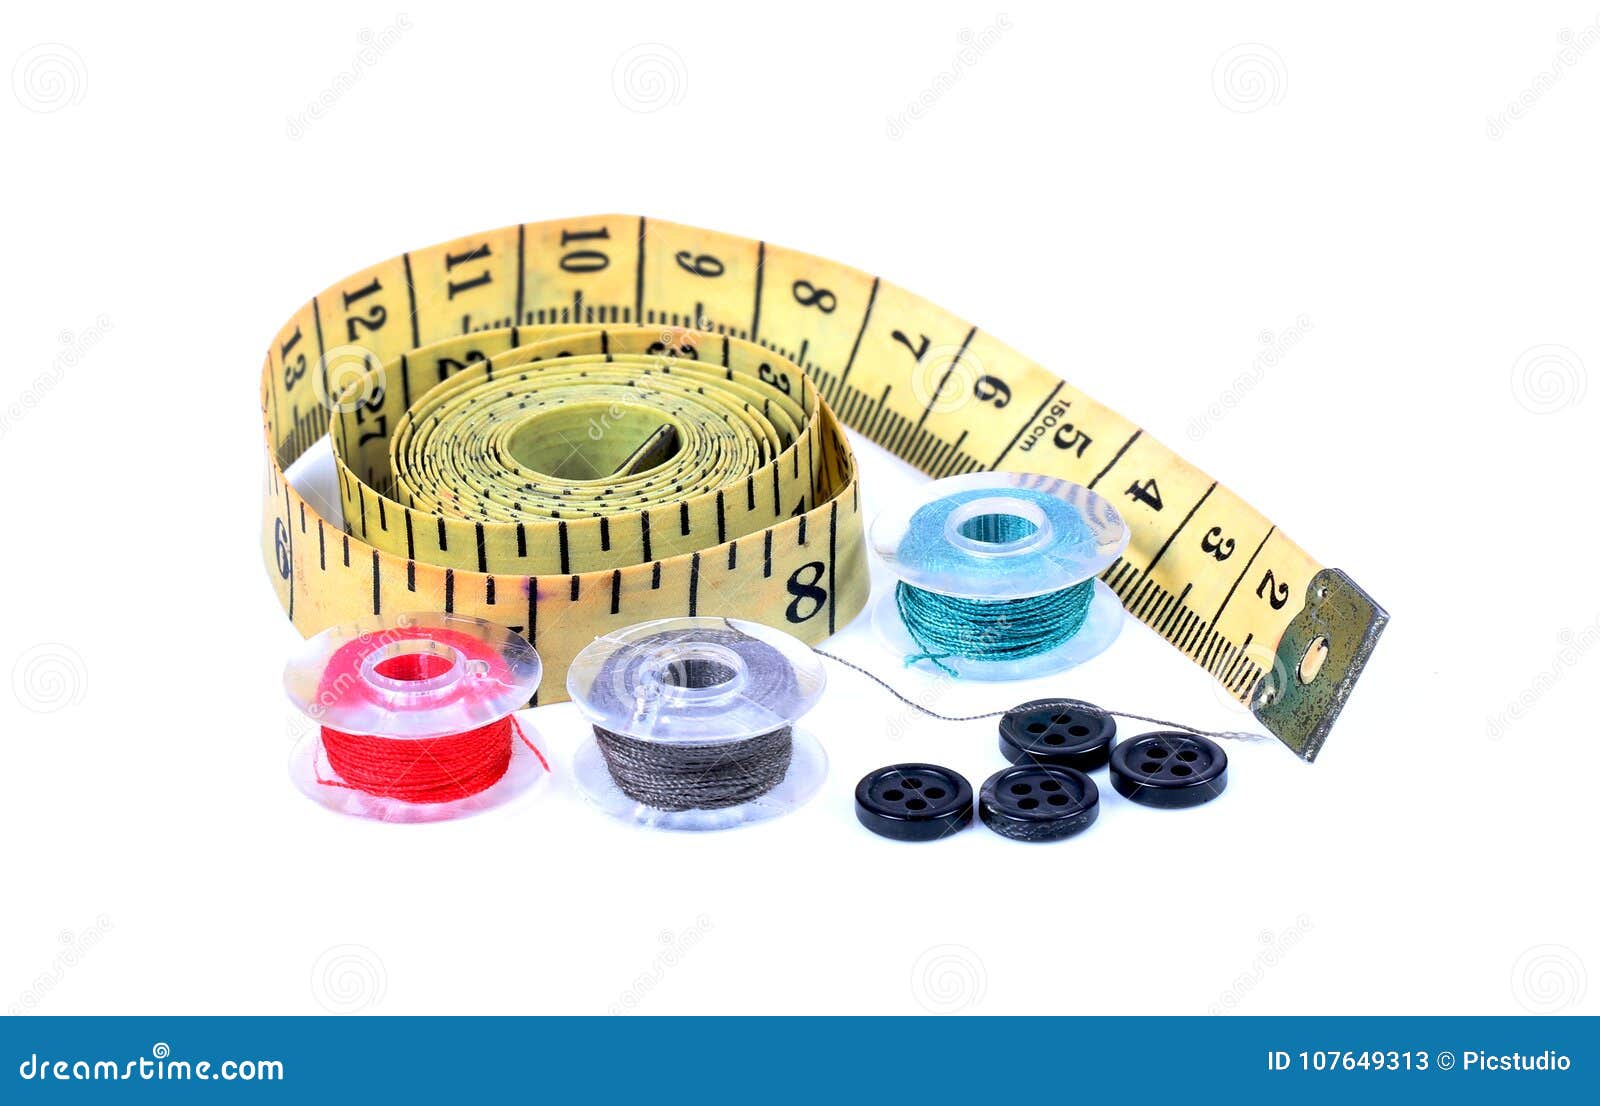 Seamstress using tape measure Stock Photo by ©tonodiaz 149437584